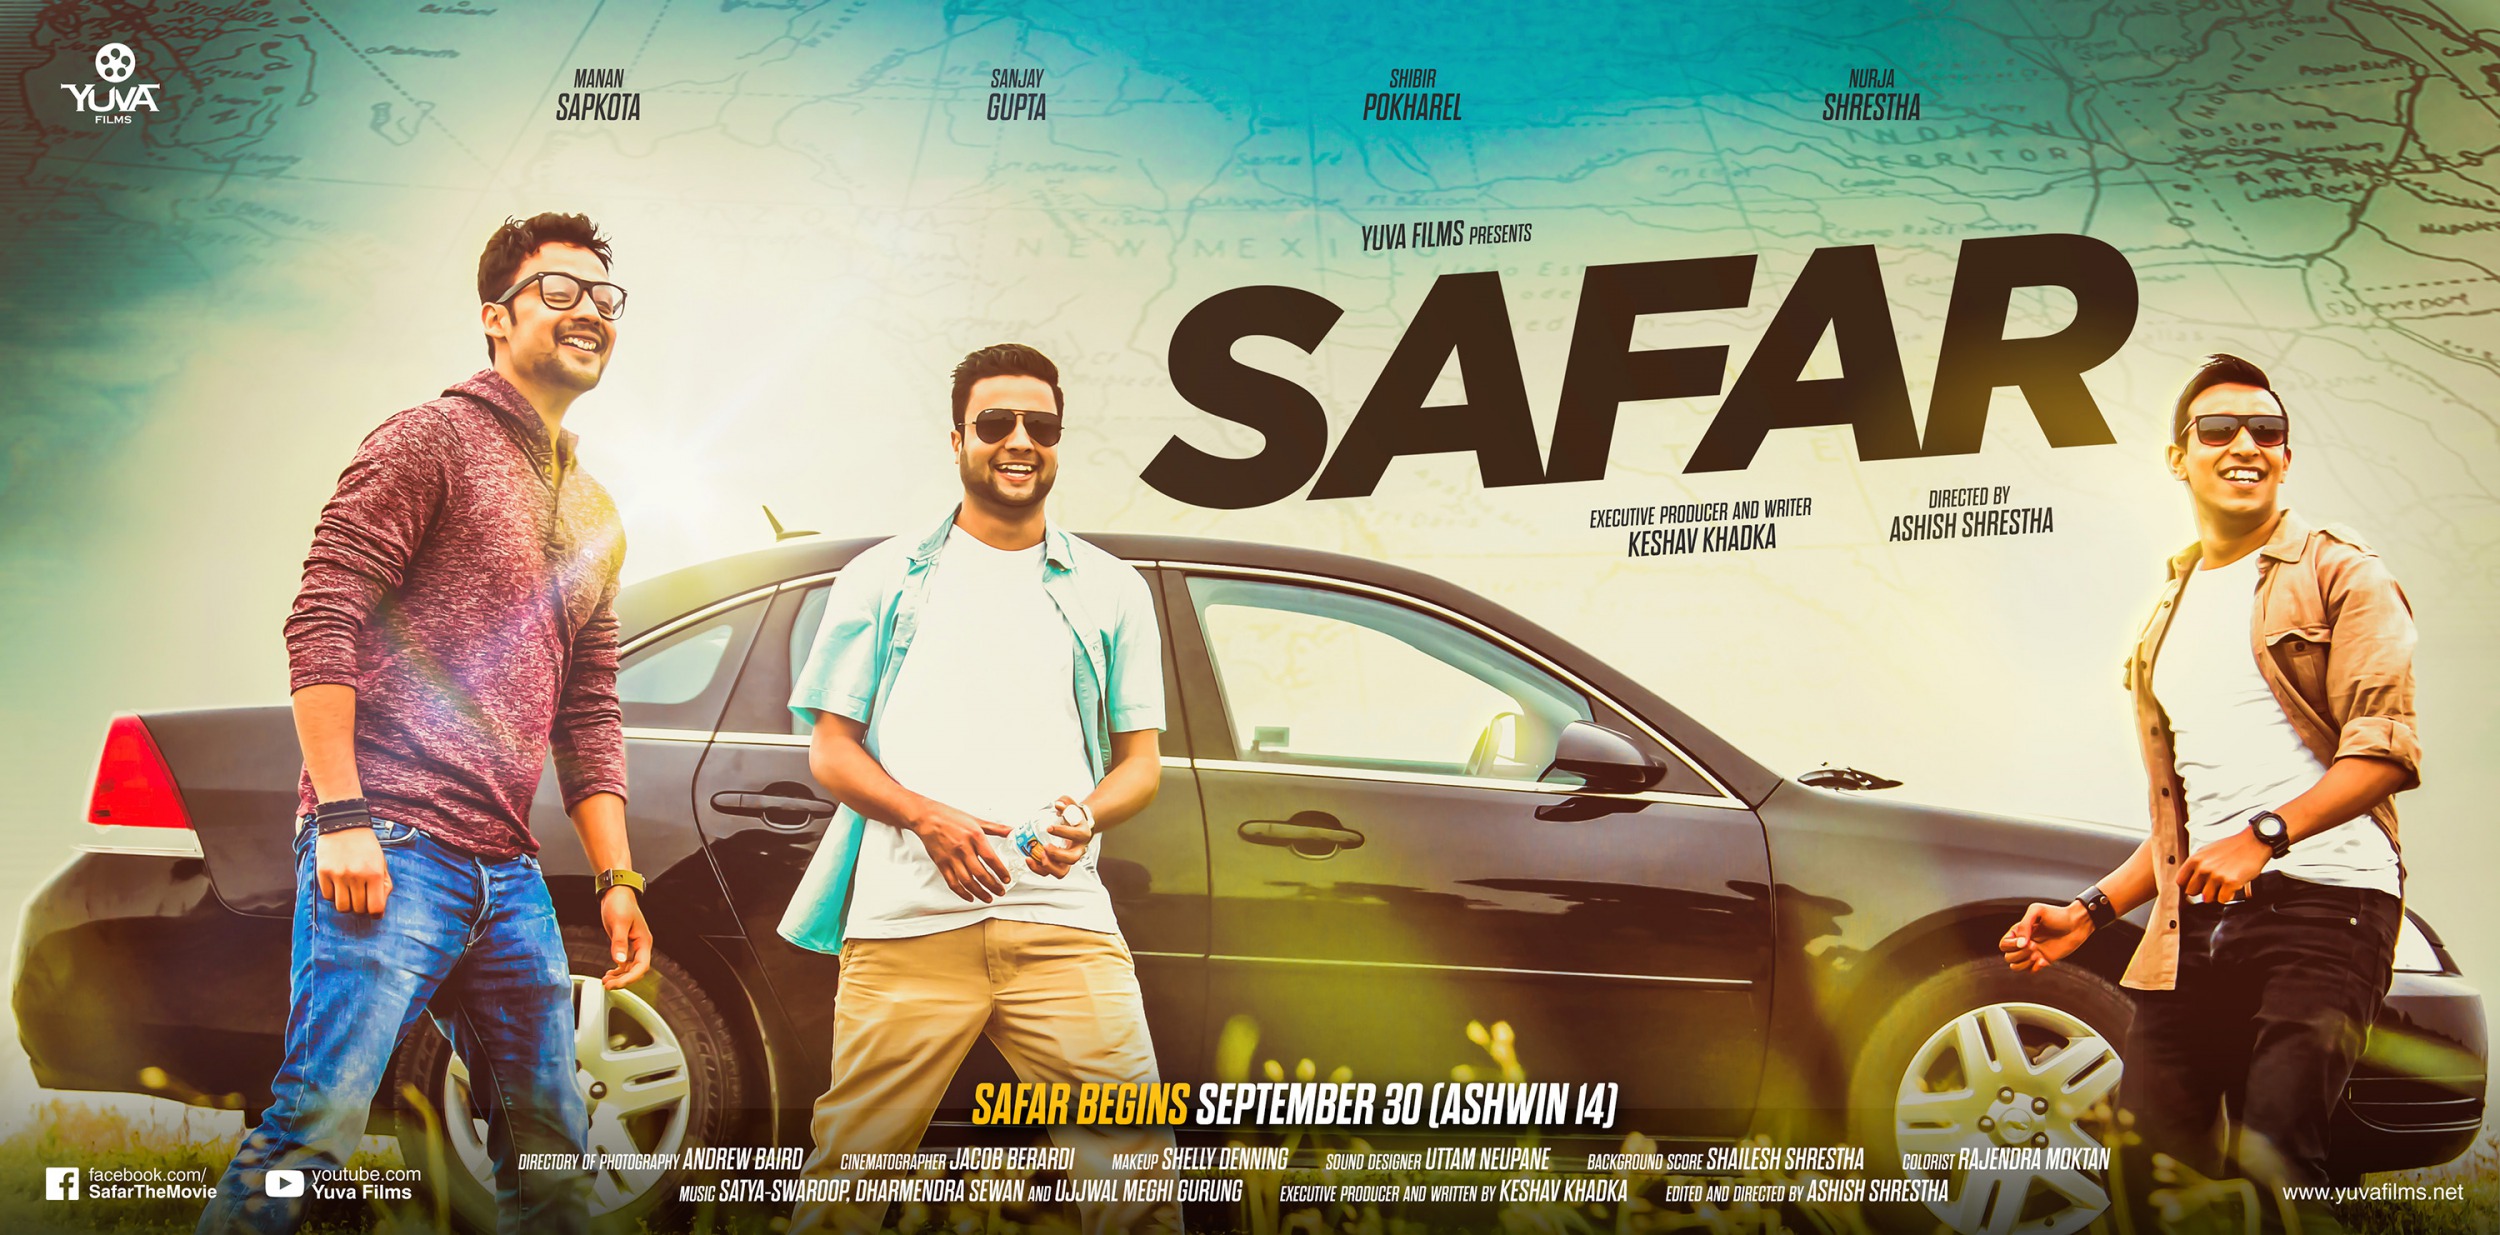 Mega Sized Movie Poster Image for Safar (#2 of 5)